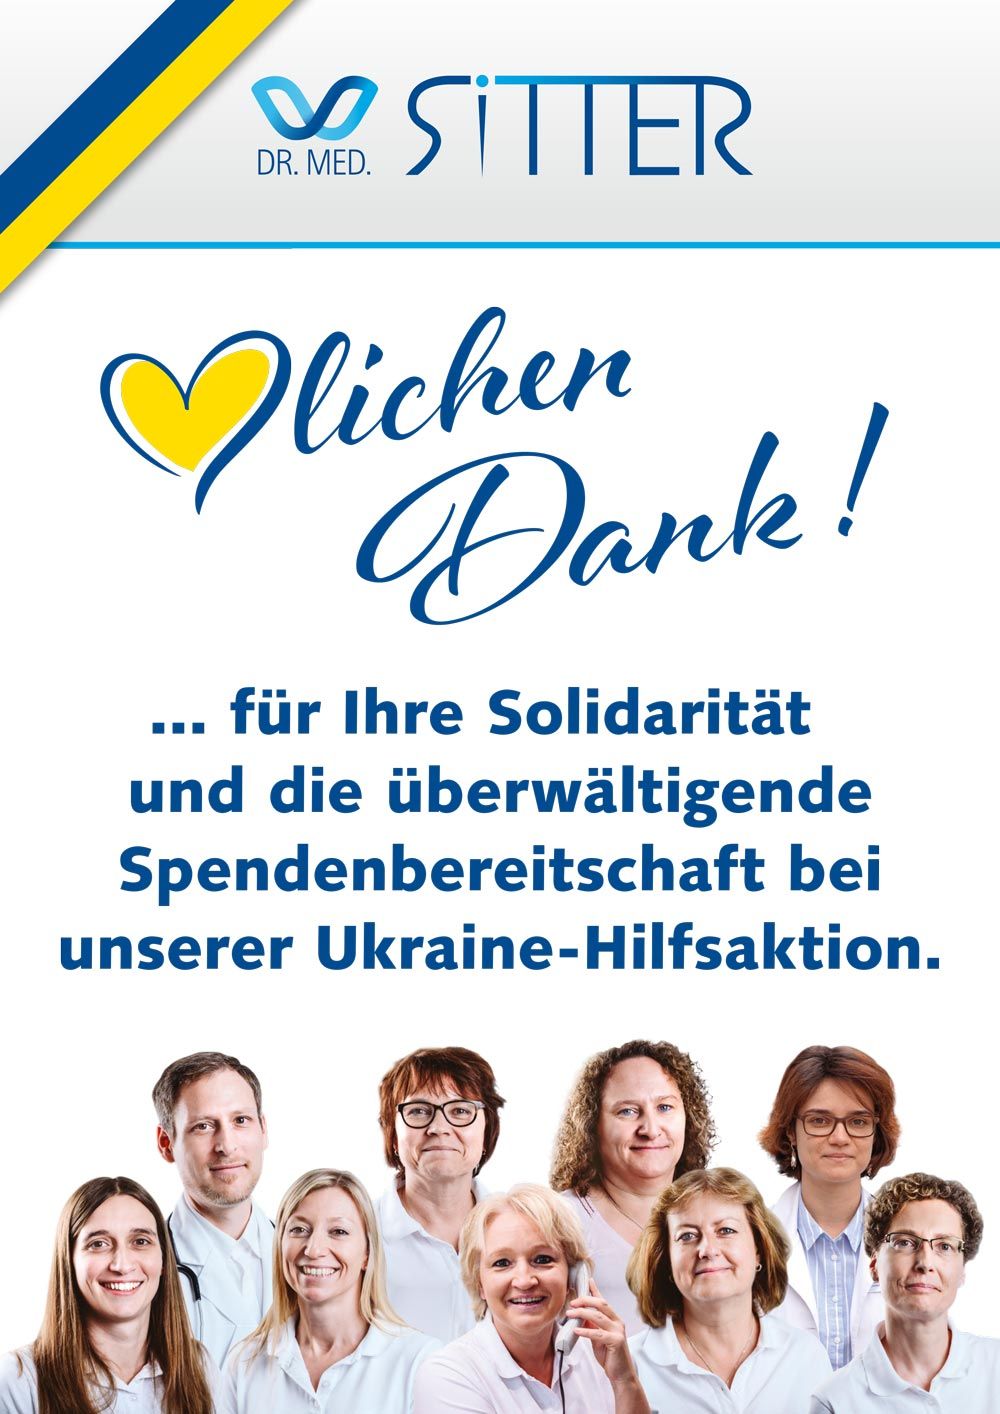 Ukraine Plakat